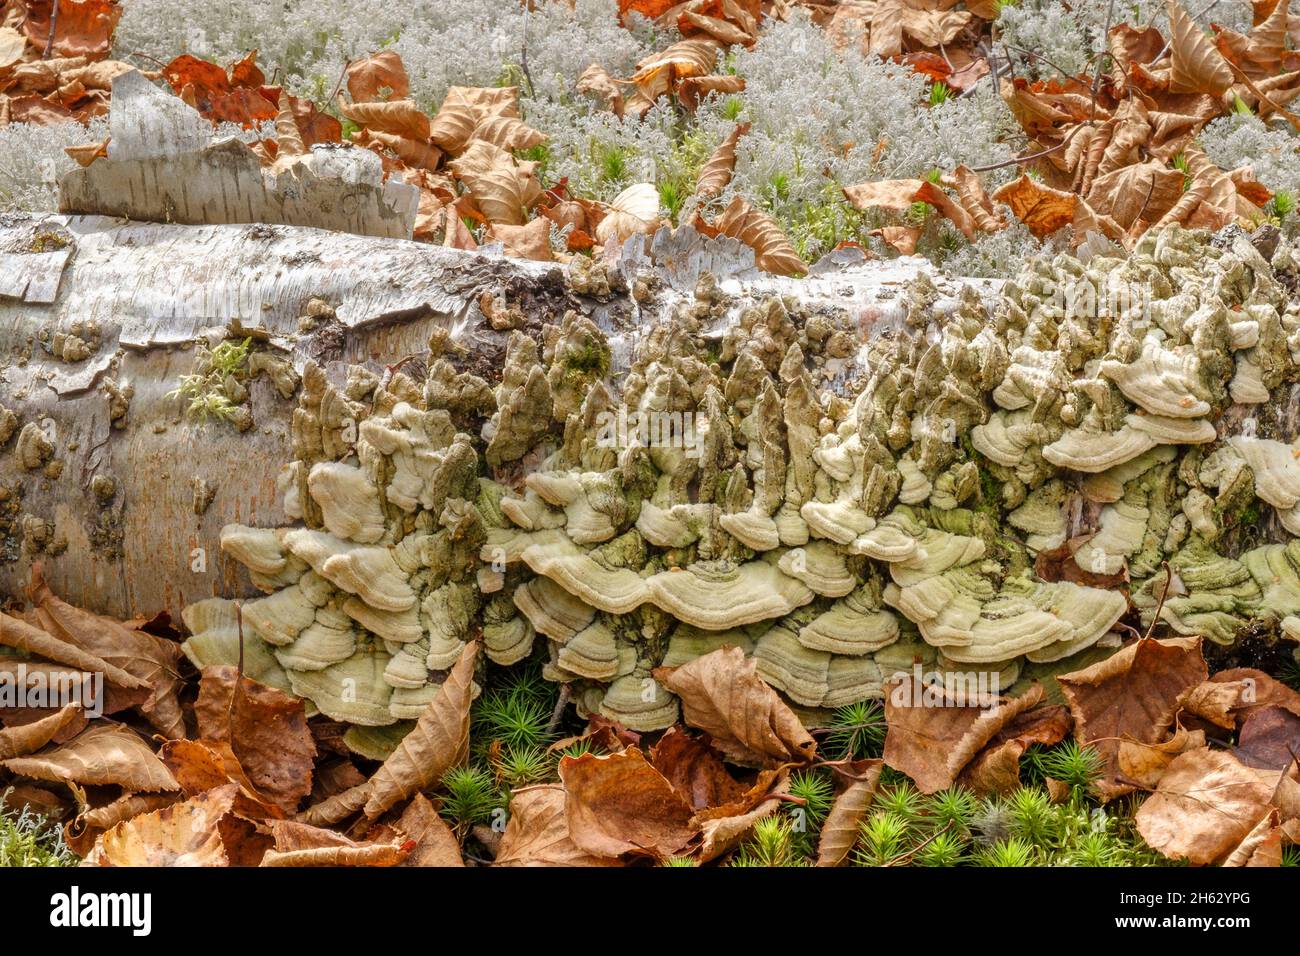 Turkey tail fungus on decaying birch log Stock Photo